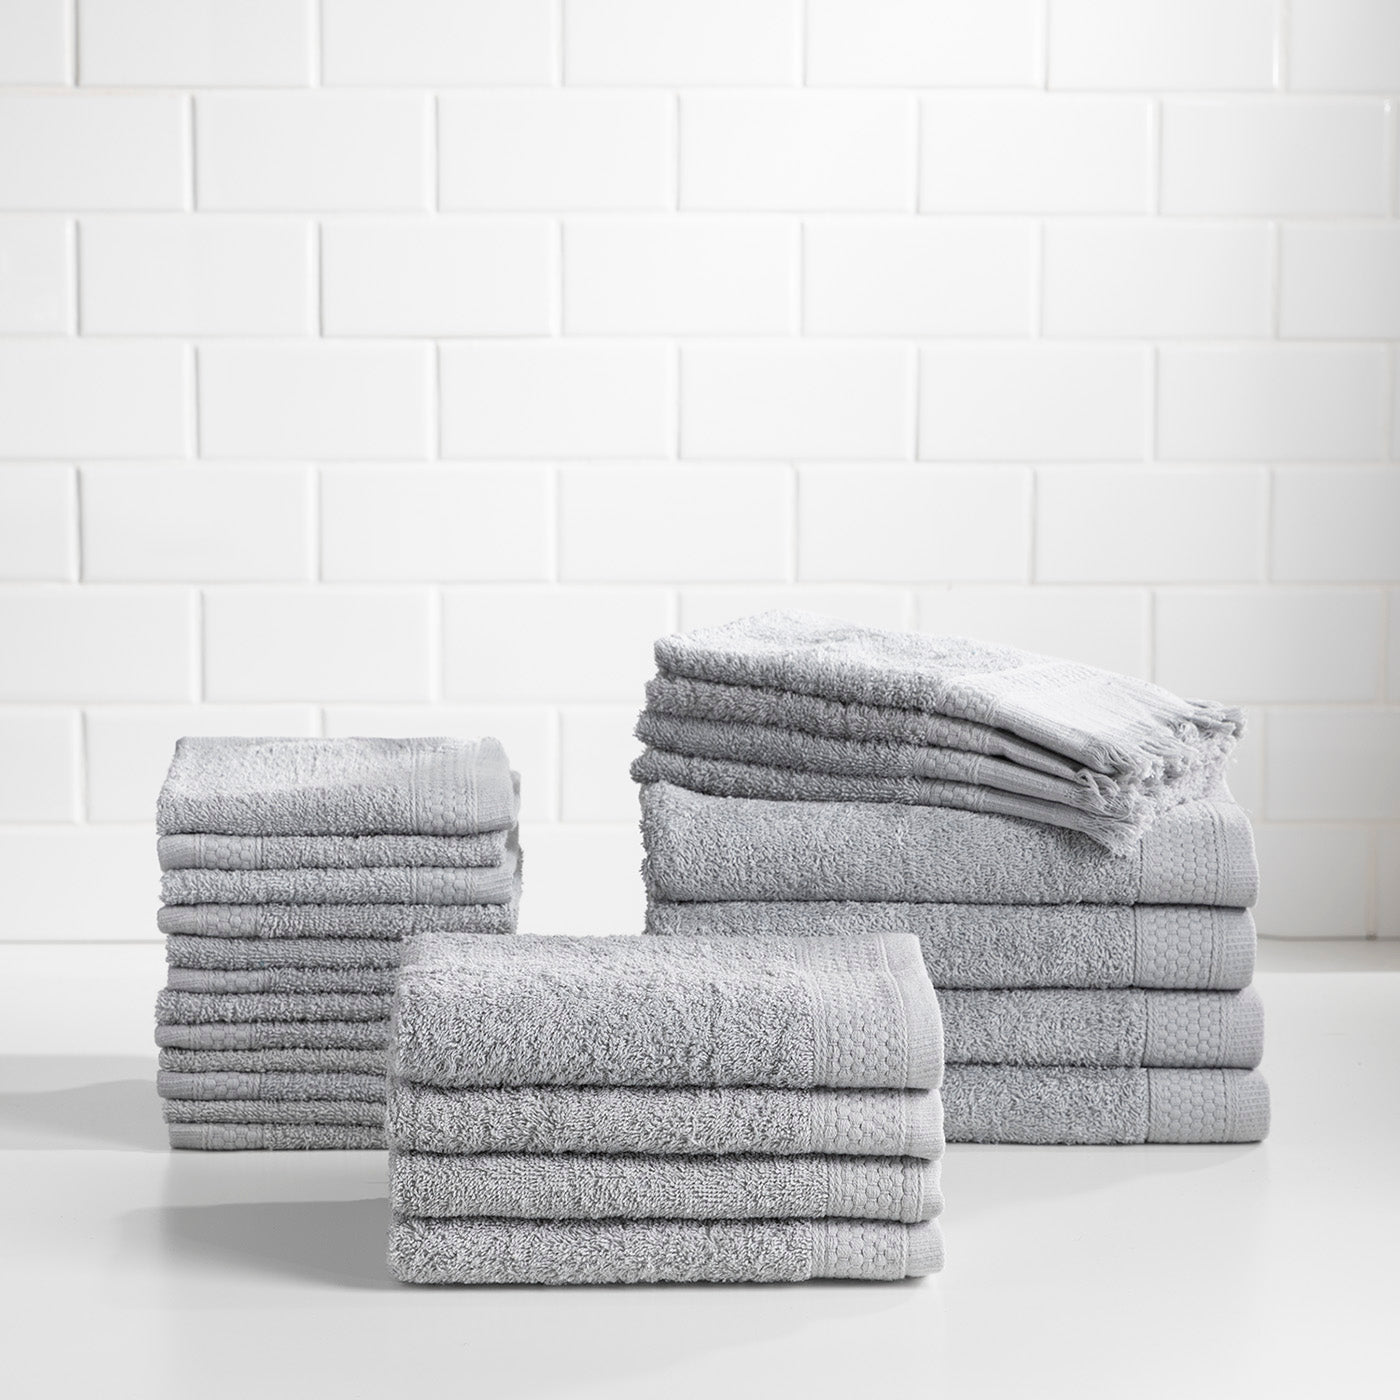 Sobel At Home 100% Cotton 24-Piece Bath Towel Set, Graphite Gray